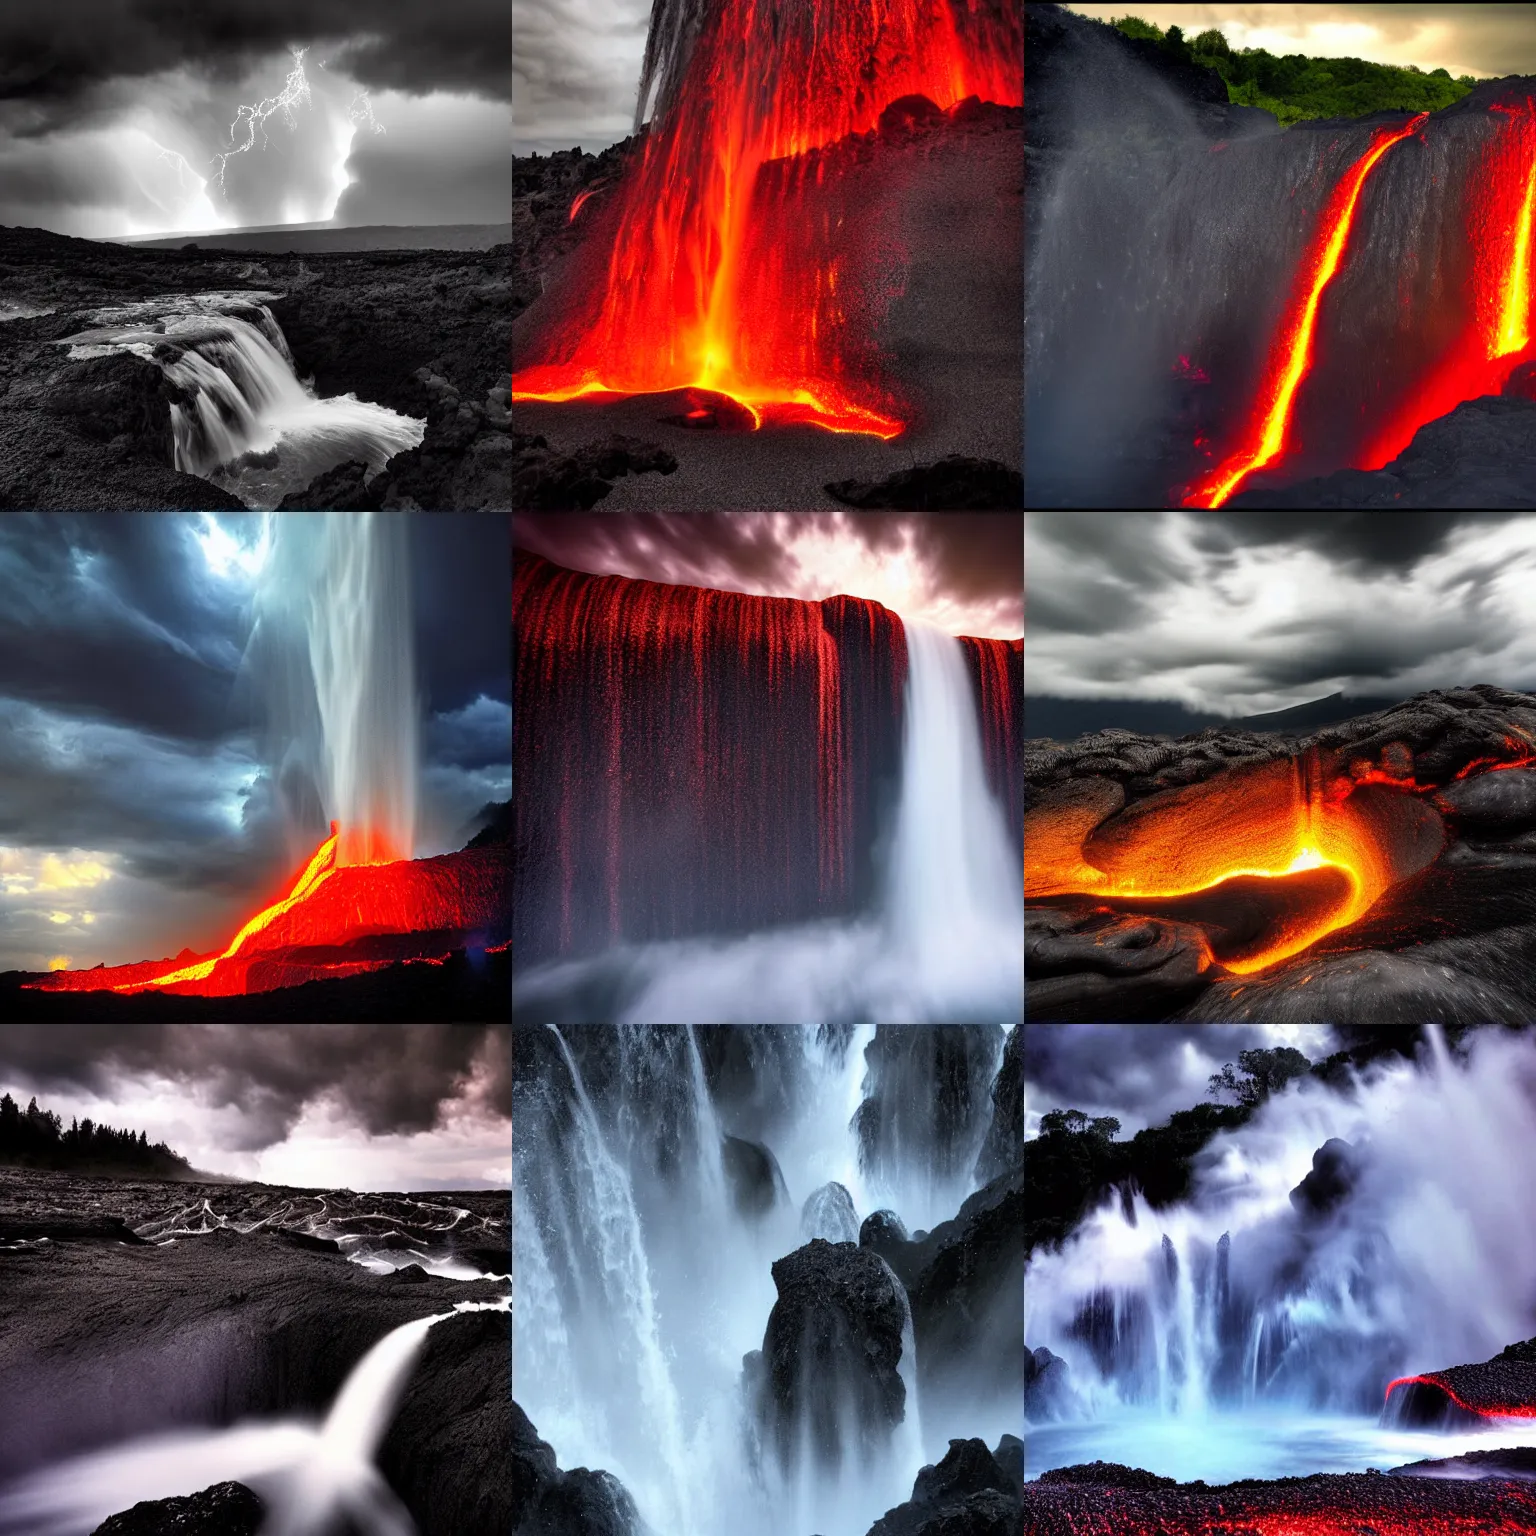 Prompt: lava waterfall, phantasy, dark mood, dramatic clouds, godrays